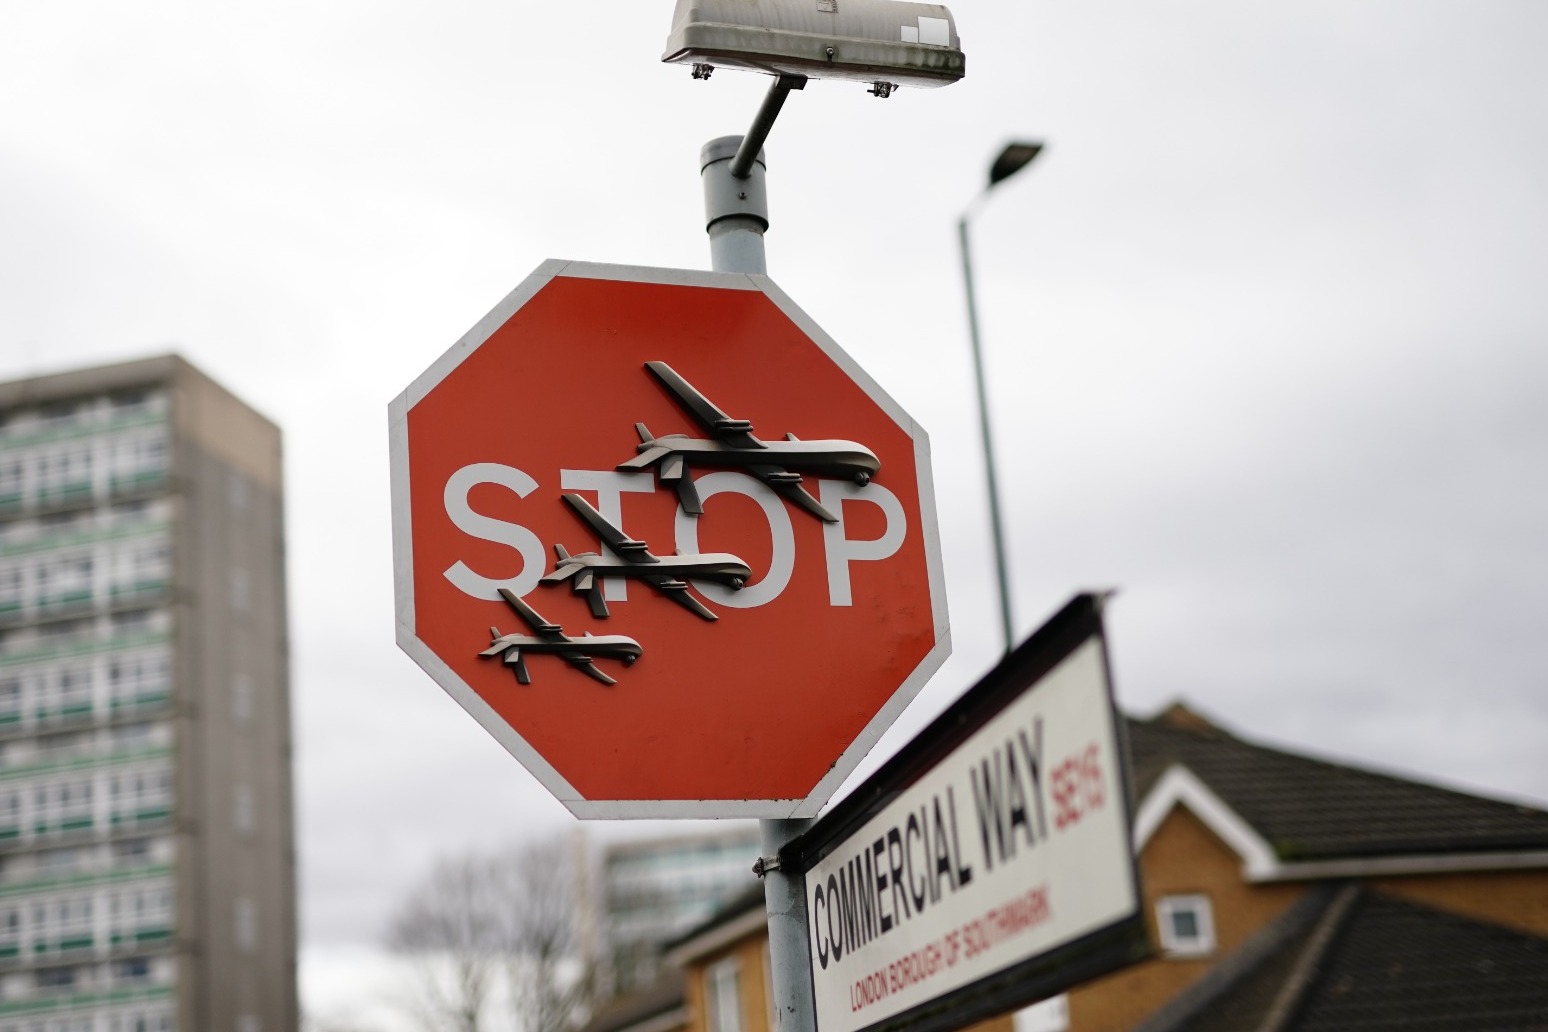 Man arrested over removal of Banksy road sign 